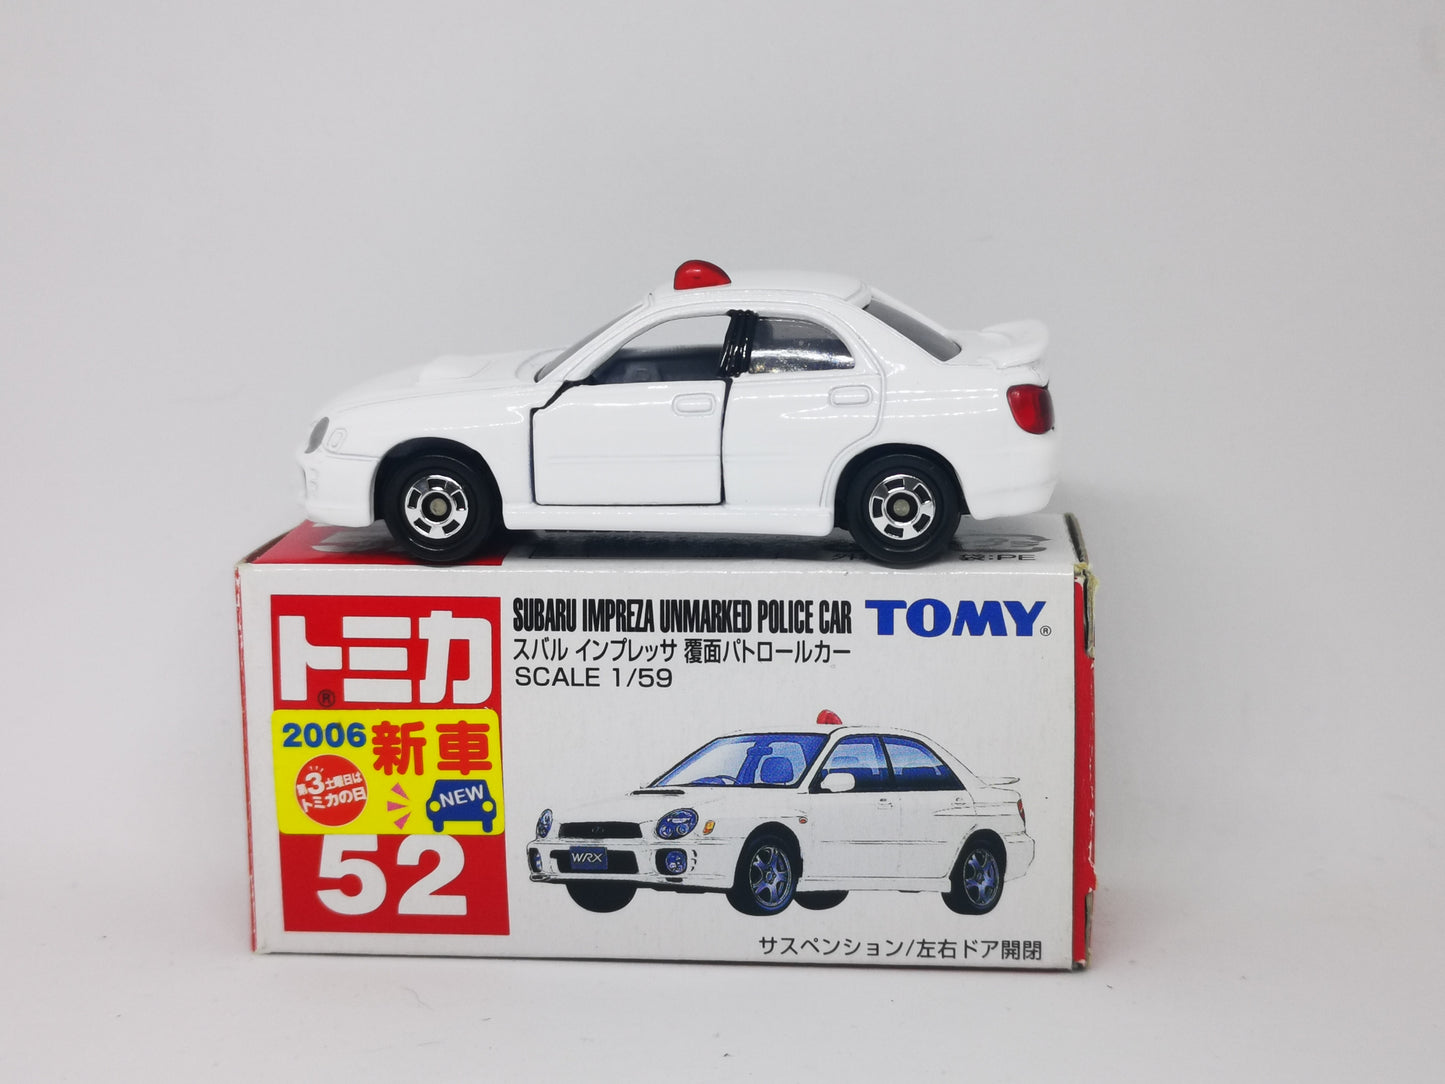 Tomica No.52 Subaru Impreza Unmarked Police Car